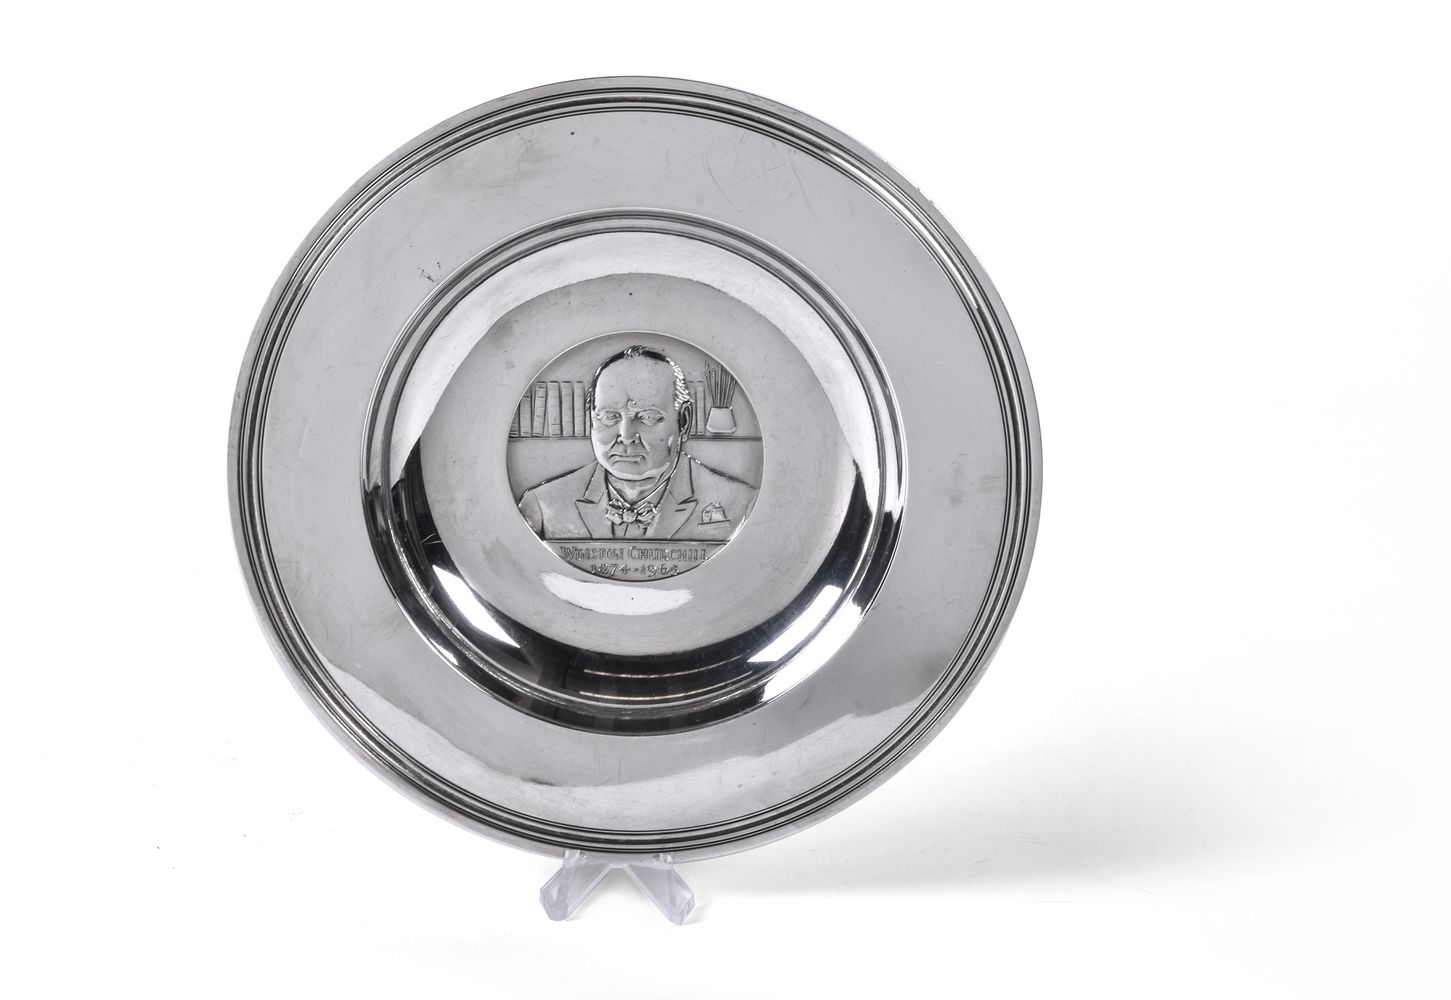 [Winston Churchill interest] A silver commemorative dish by C. J. Vander Ltd - Image 2 of 4